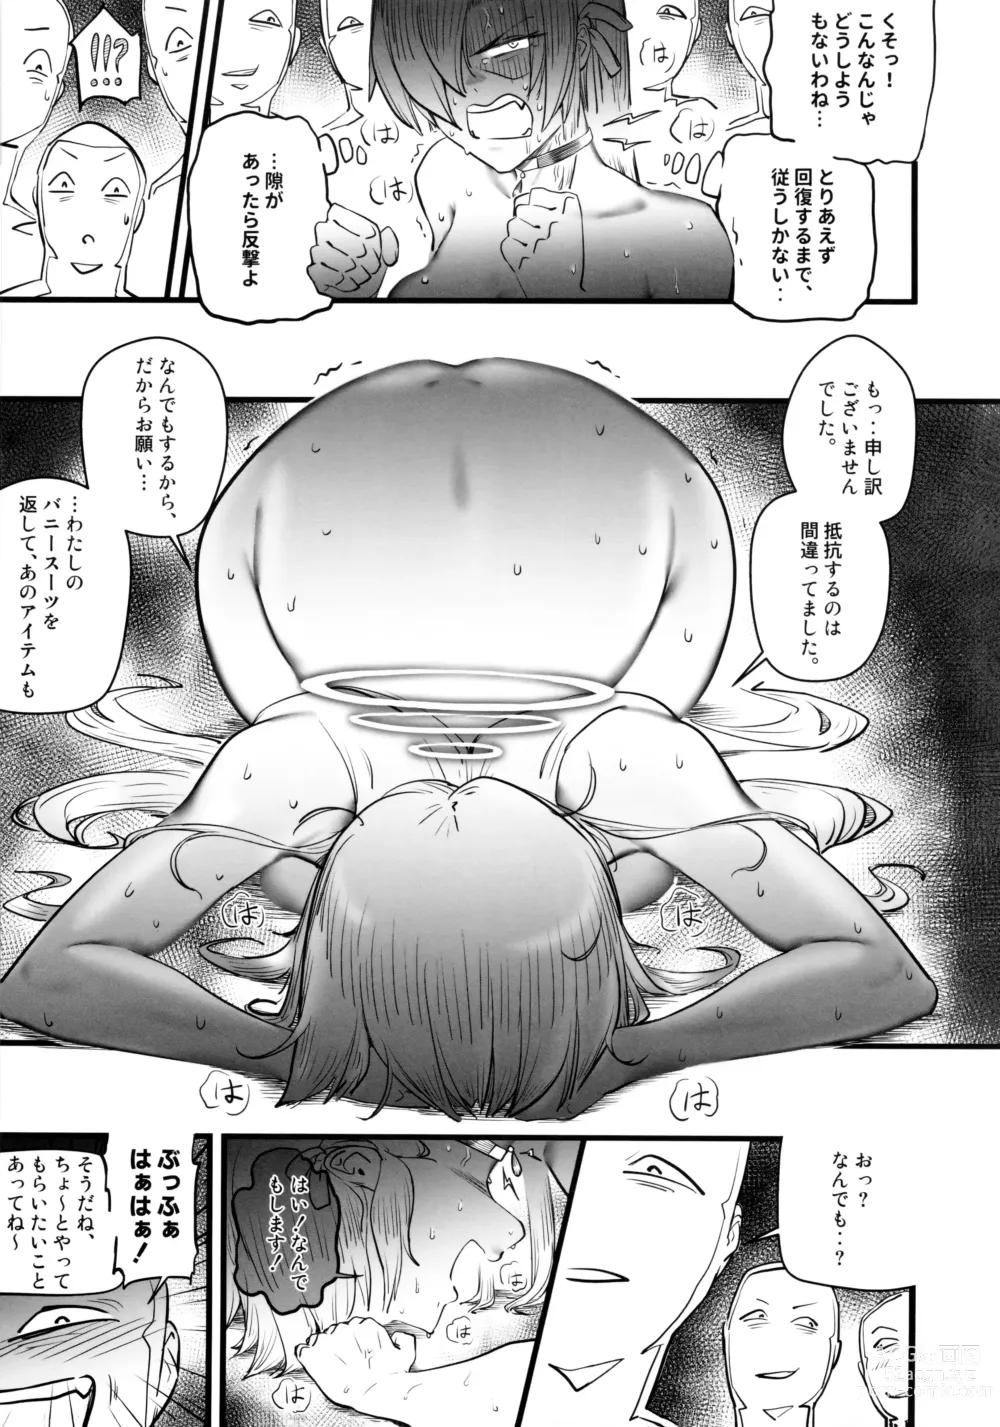 Page 6 of doujinshi Daraku